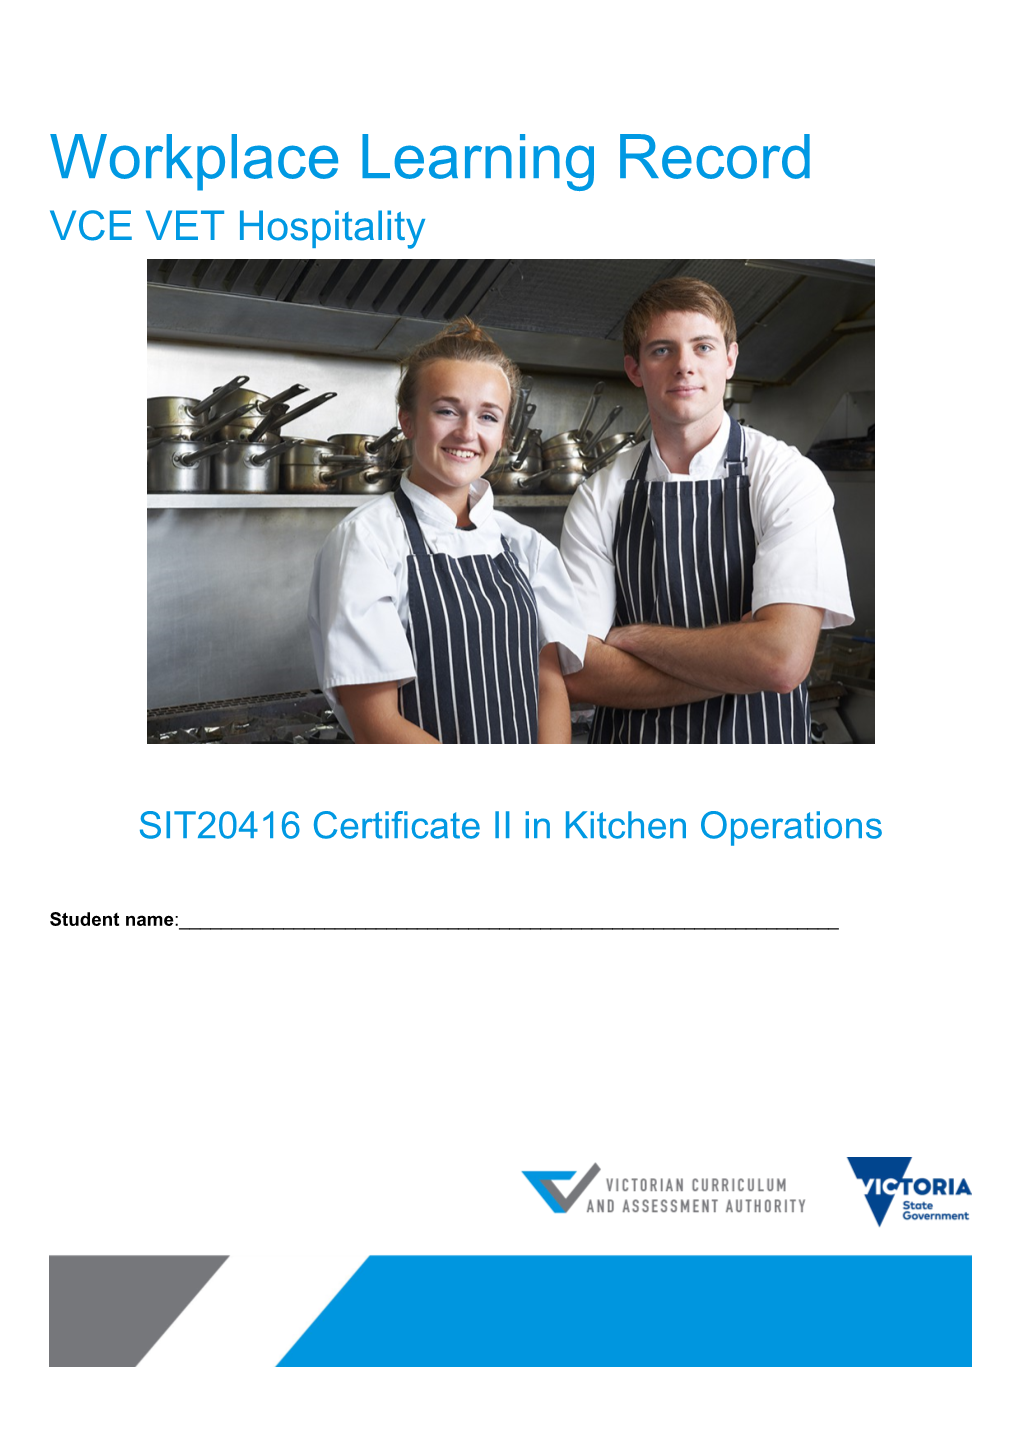 SIT20416 Certificate II in Kitchen Operations